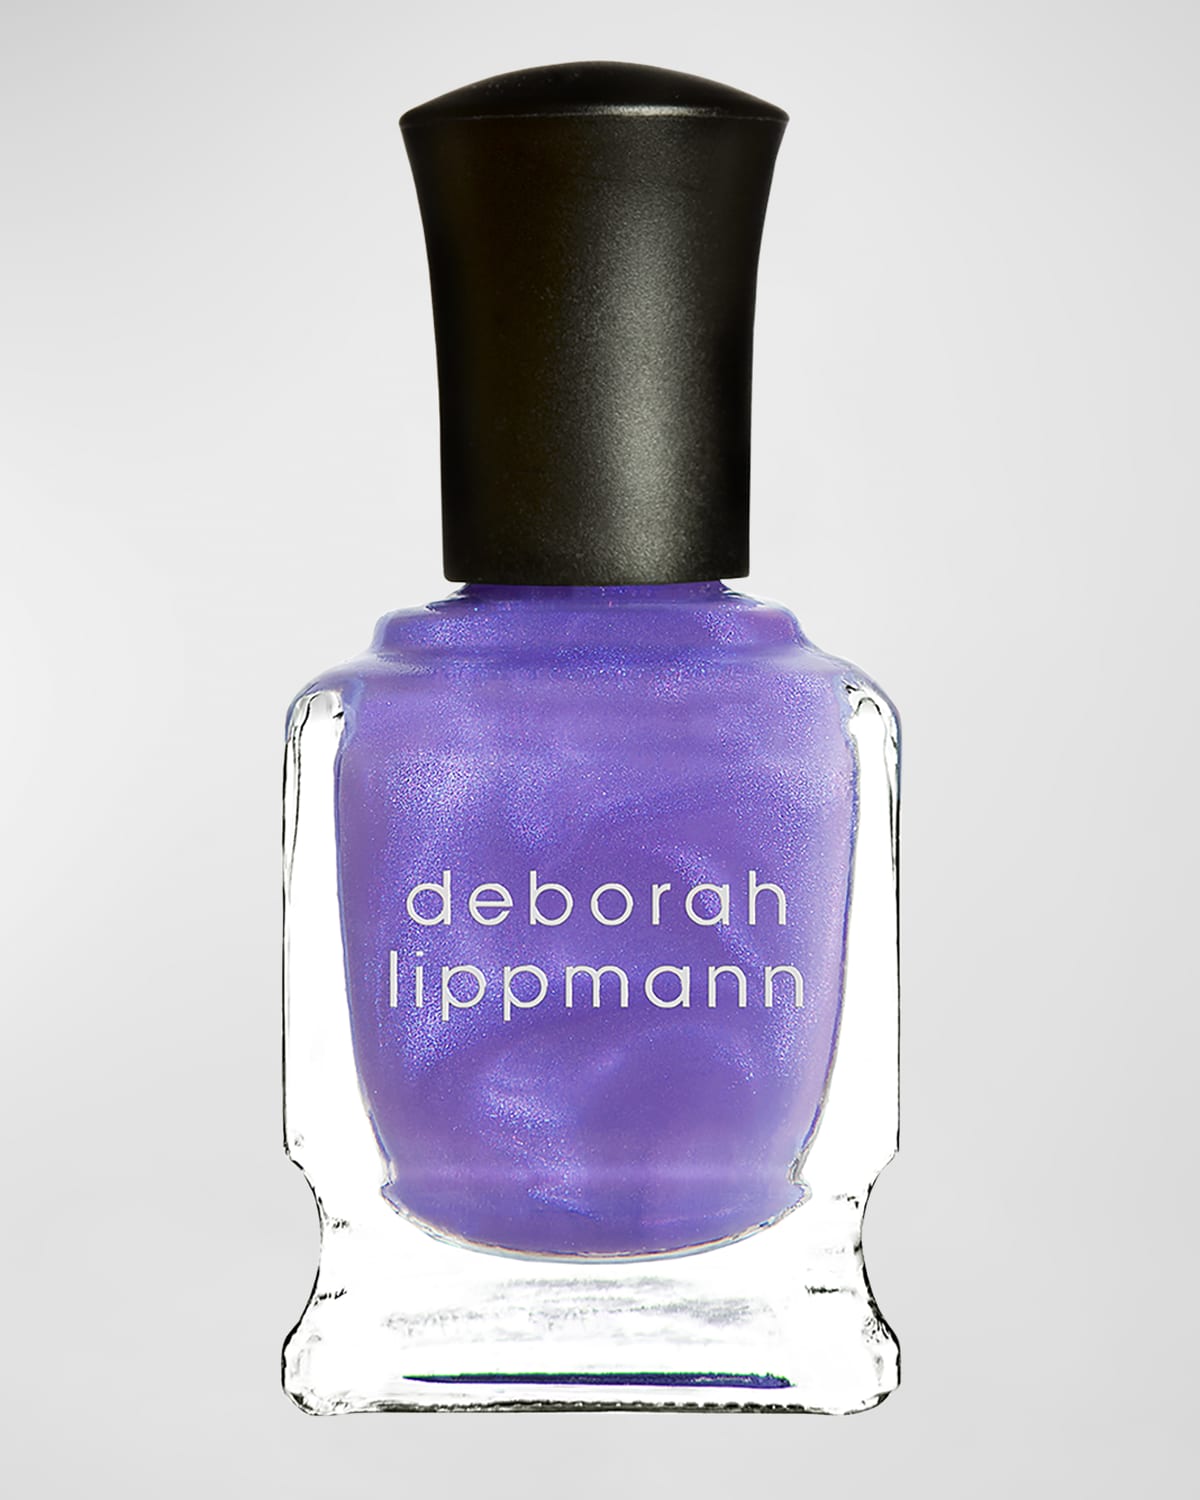 Deborah Lippmann 0.5 oz. Genie in a Bottle Nail Color